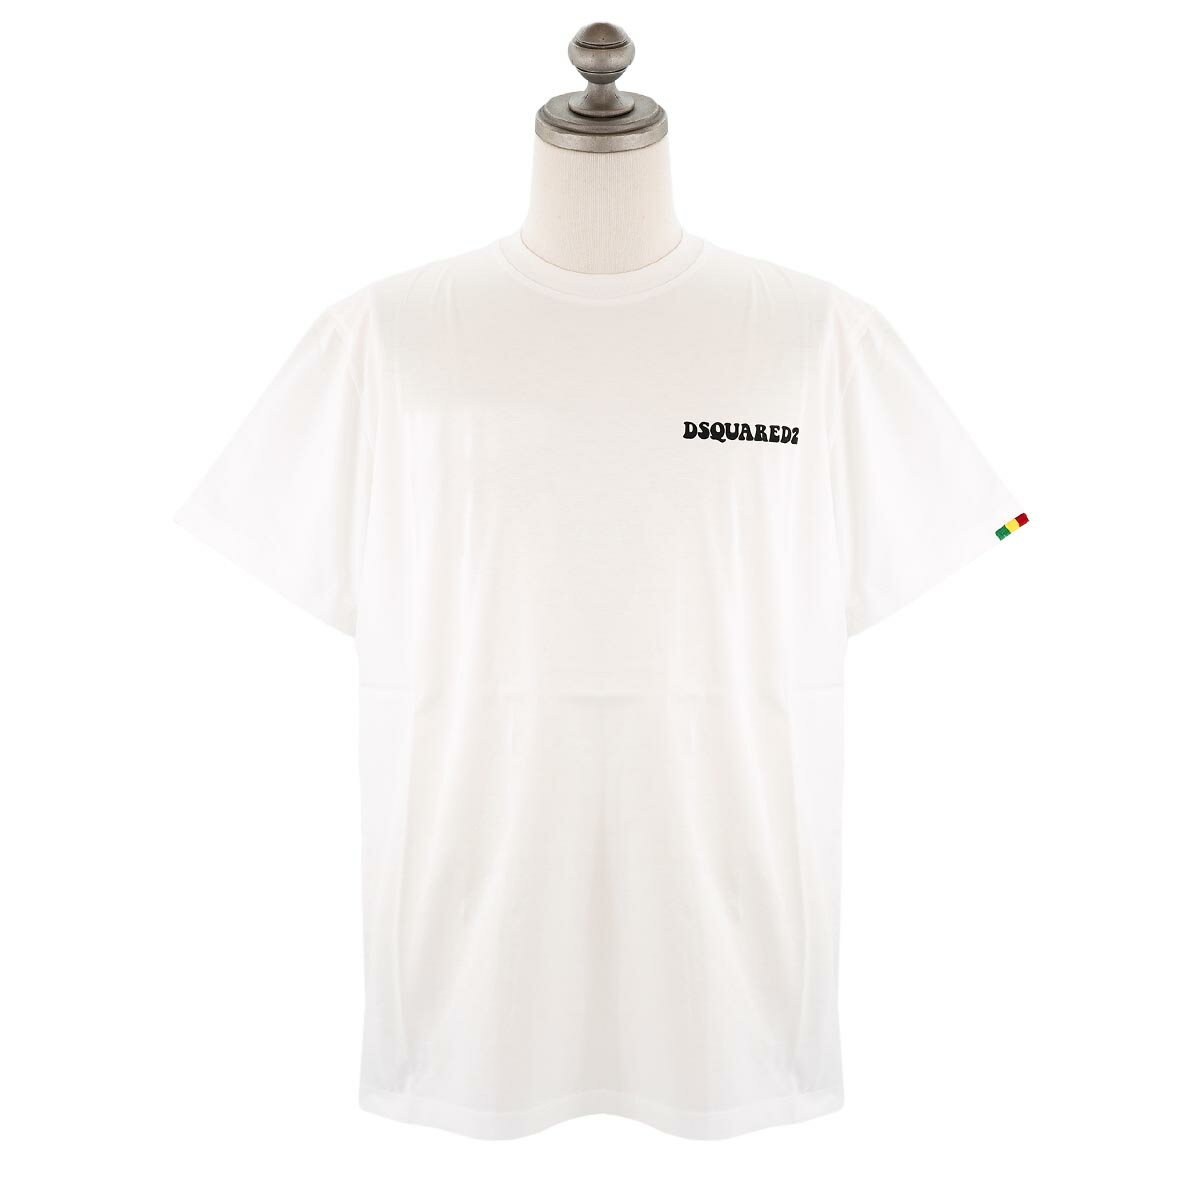 DSQUARED2 ディースクエアード 半袖Tシャツ S71GD1245 S23009 COOL FIT T-SHIRT メンズ 男性 100 WHITE ホワイト